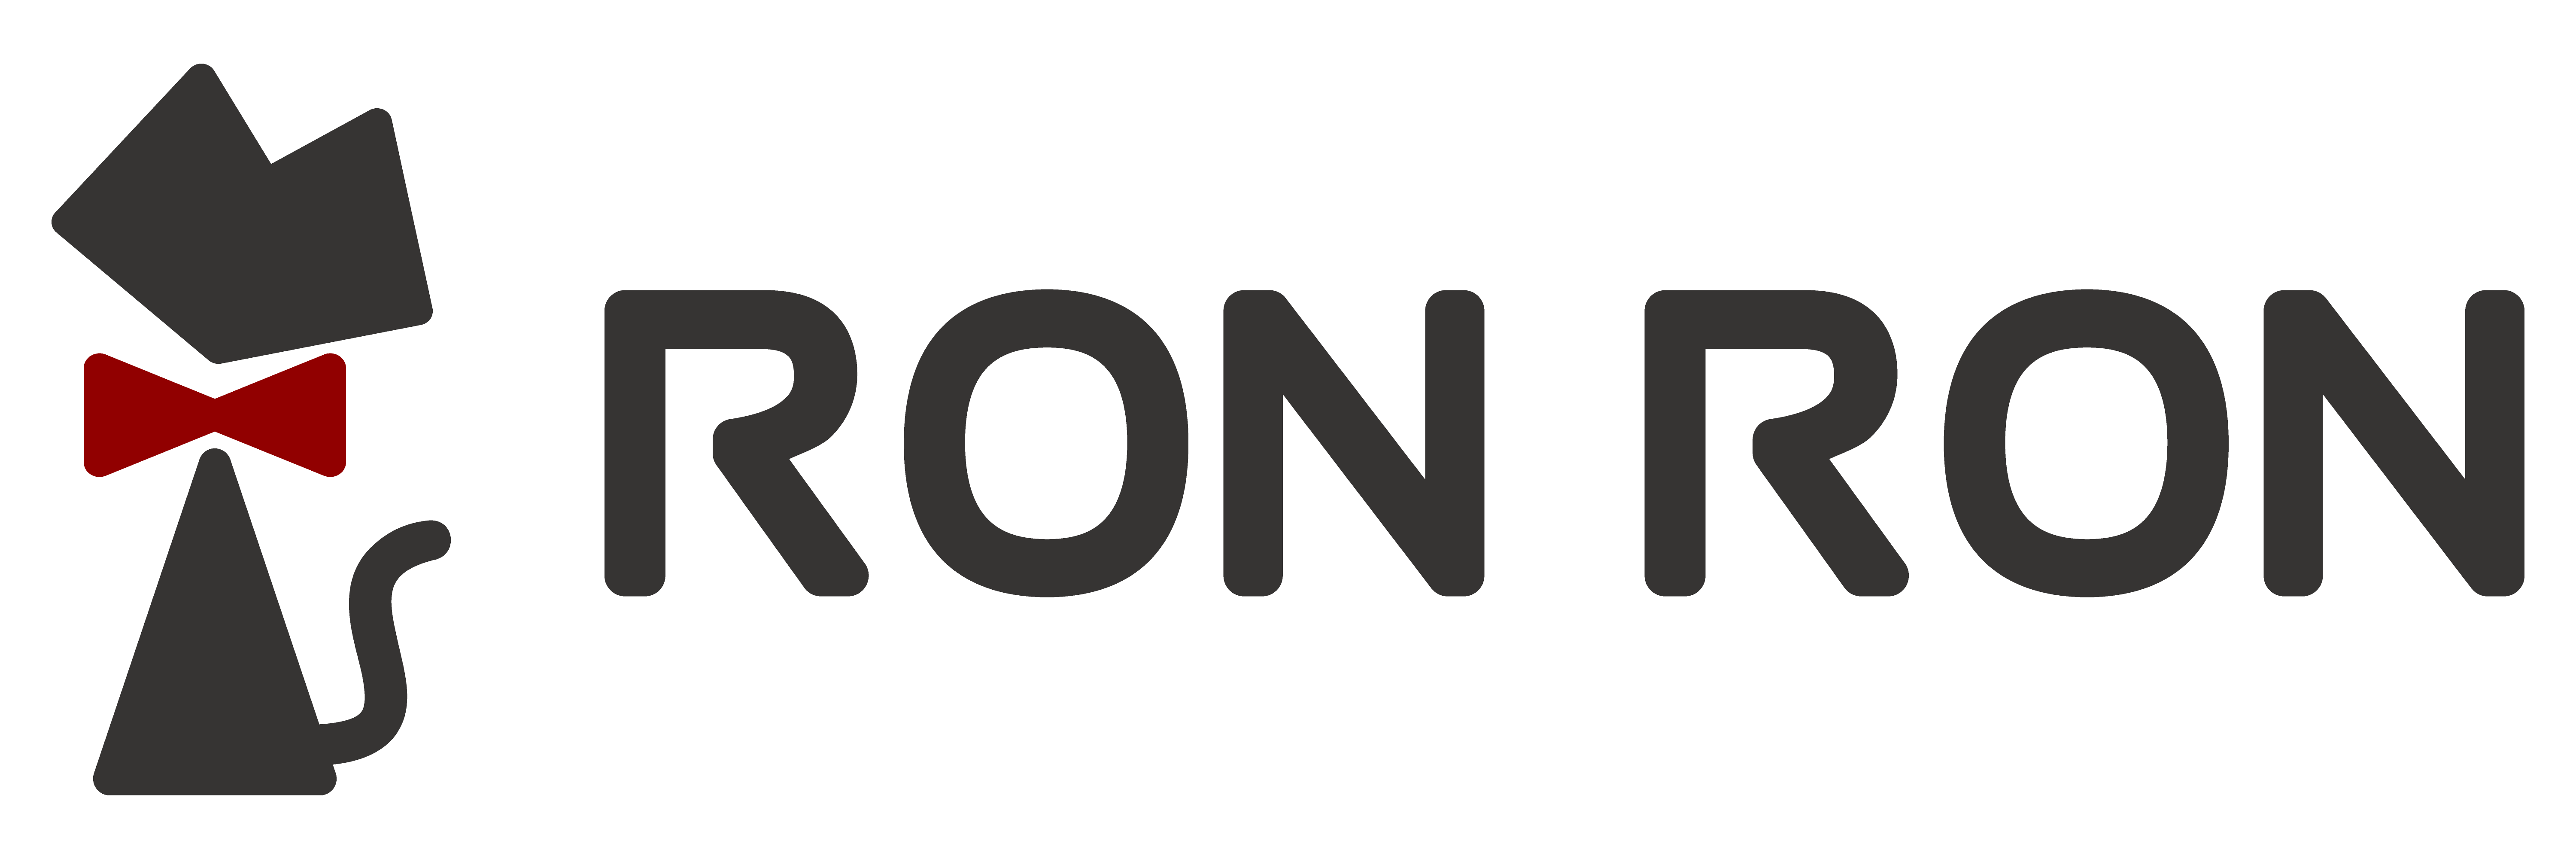 ronron_noname_logo_c1_2yoko.png